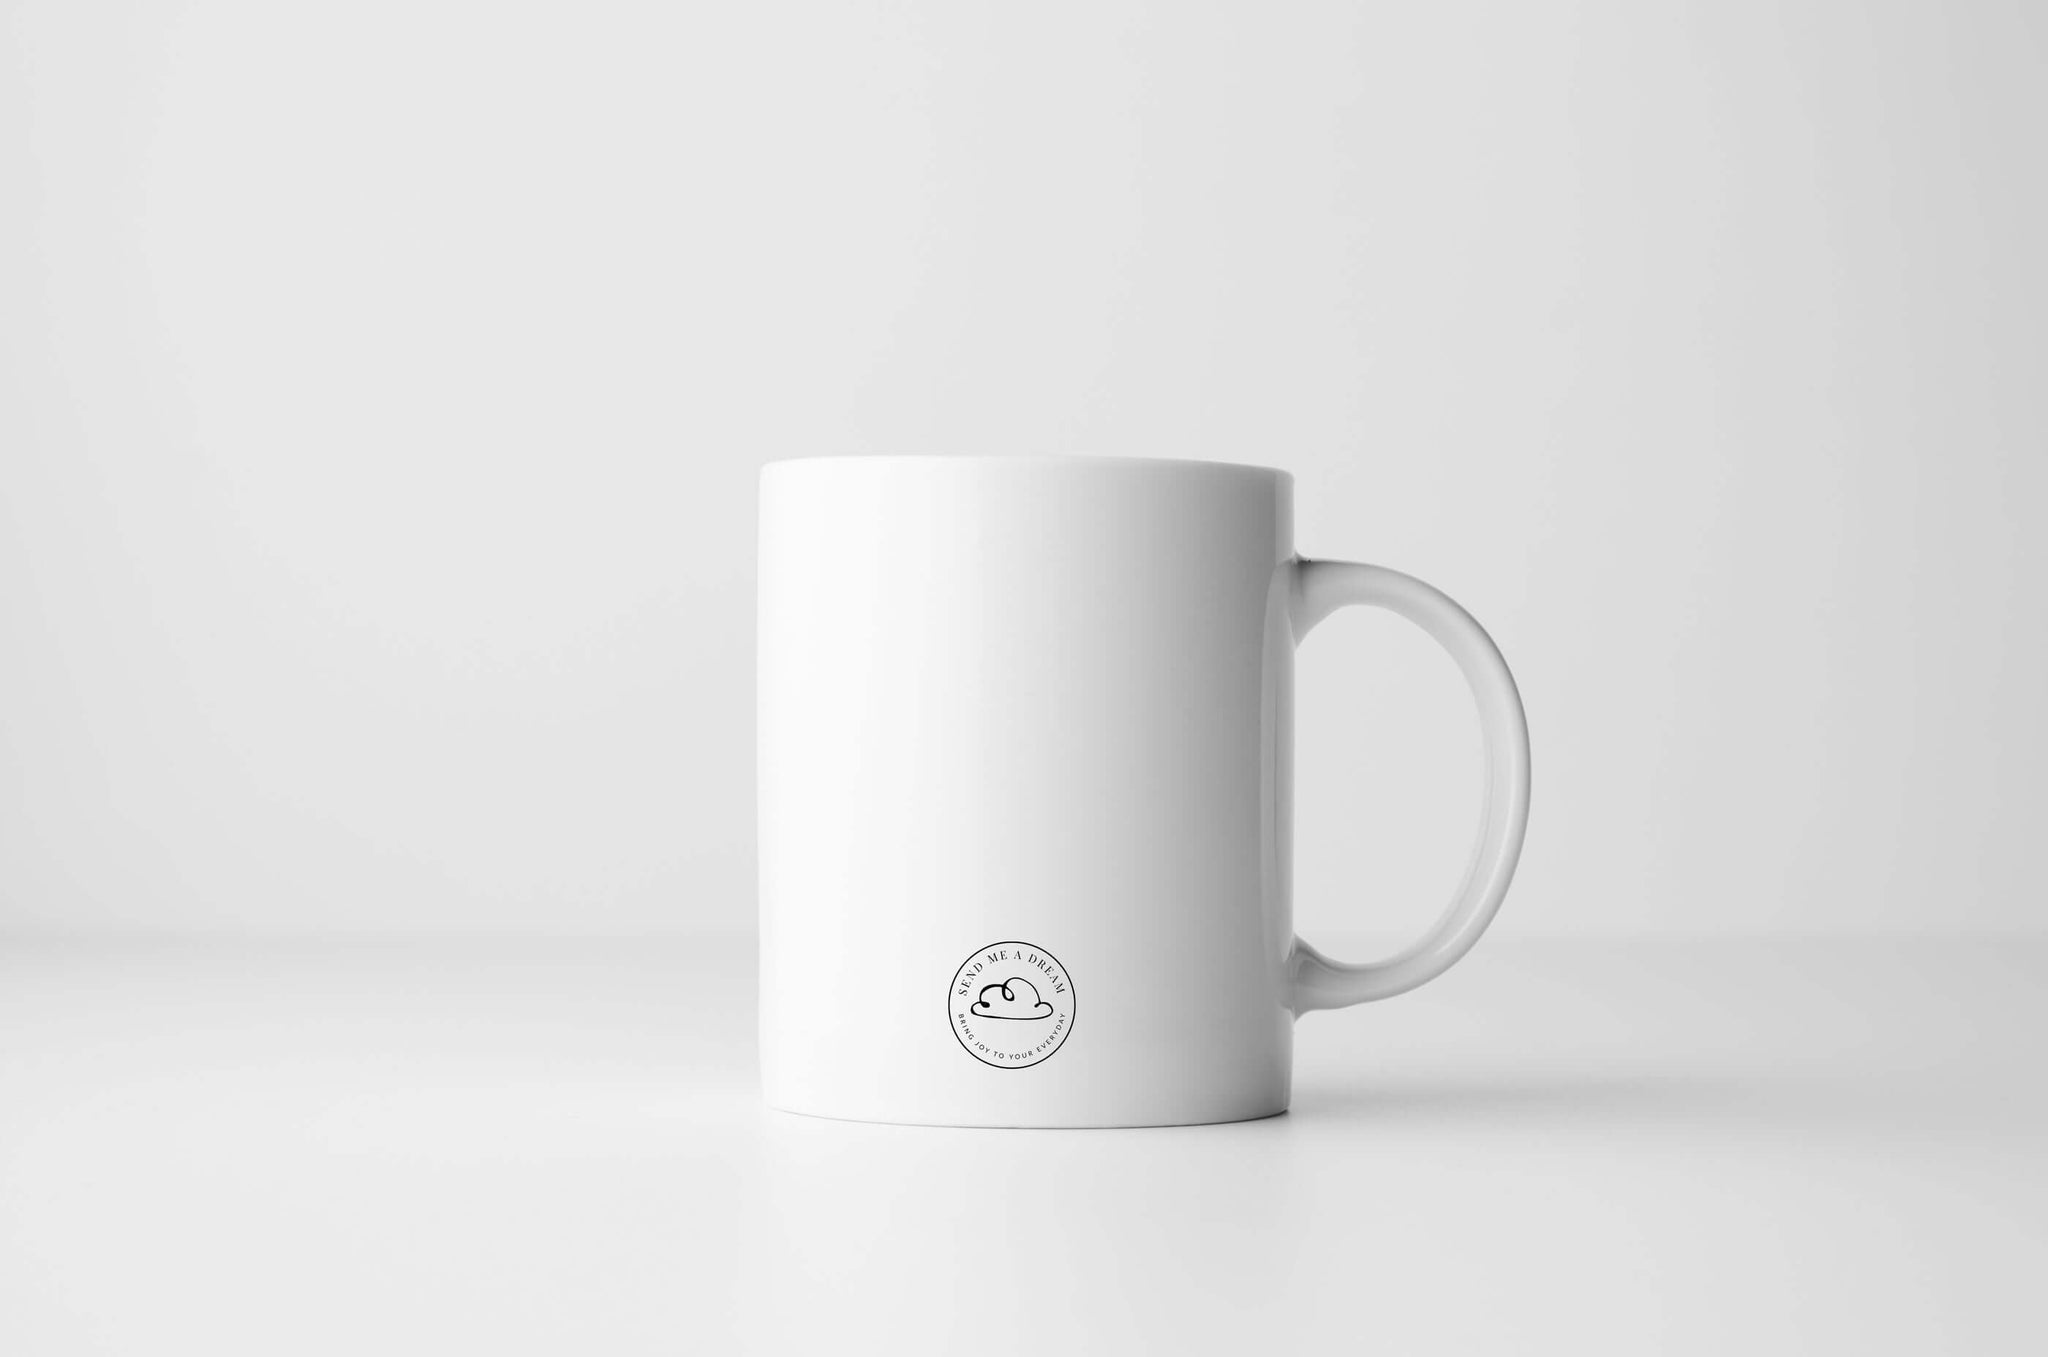 Glow Getter Luxe Mug - Send Me a Dream